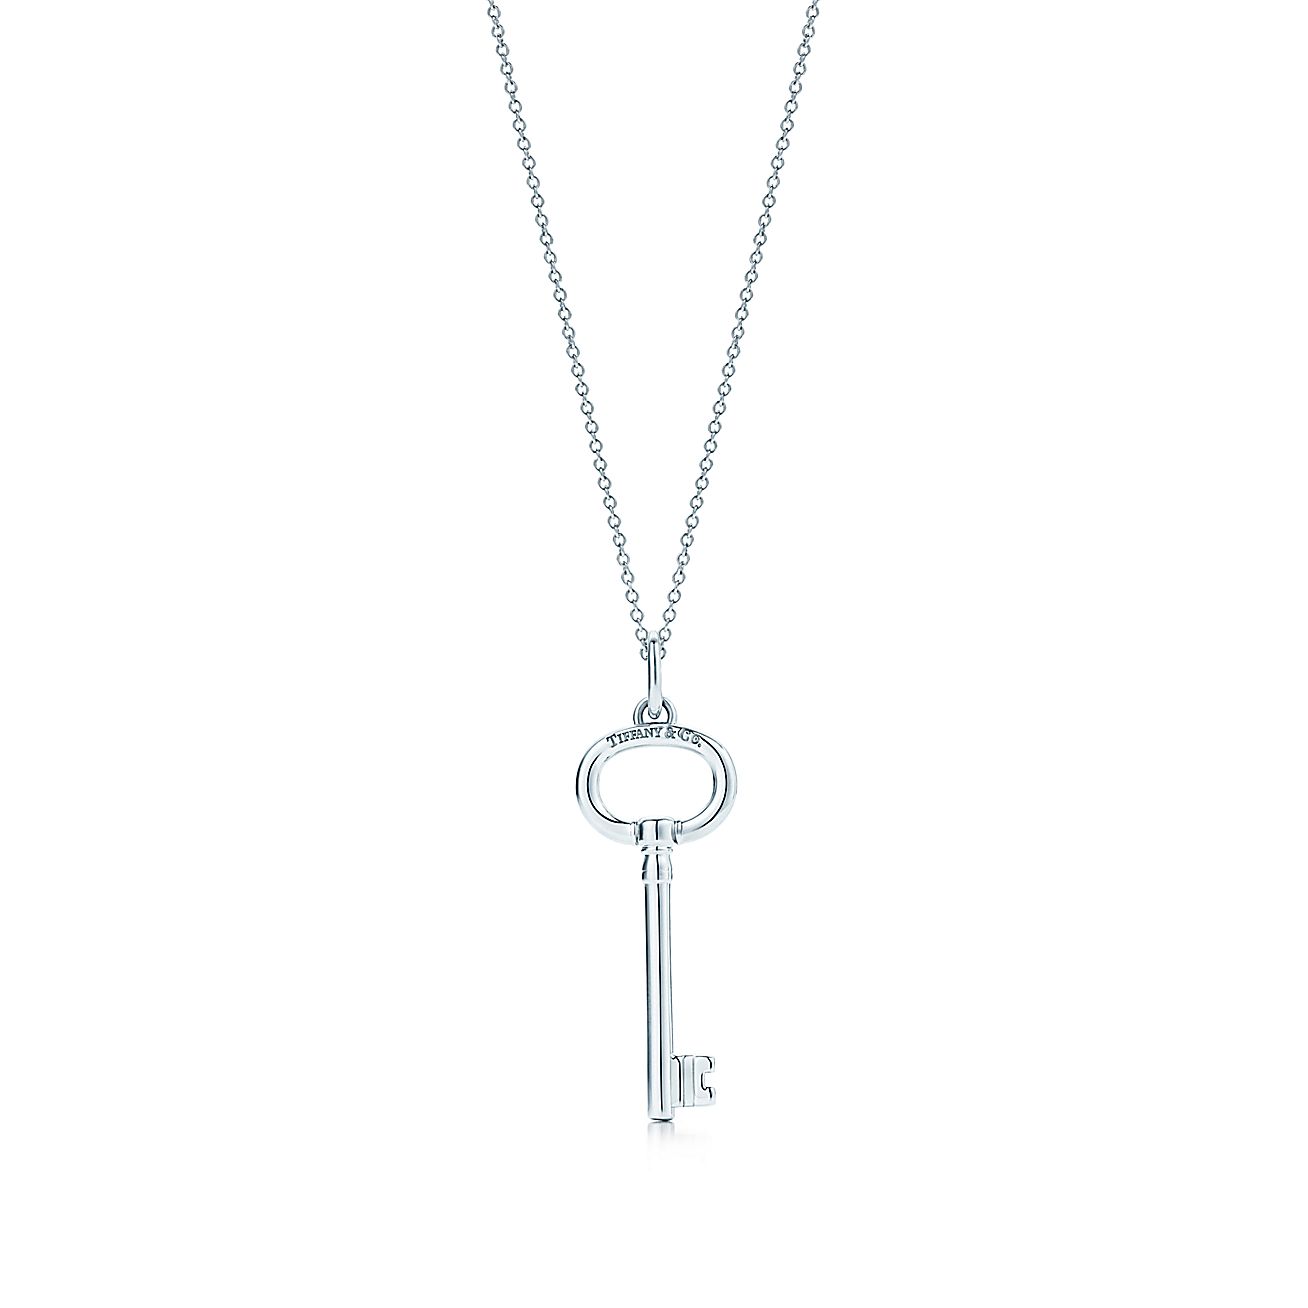 Preowned Tiffany & Co. Key Necklace